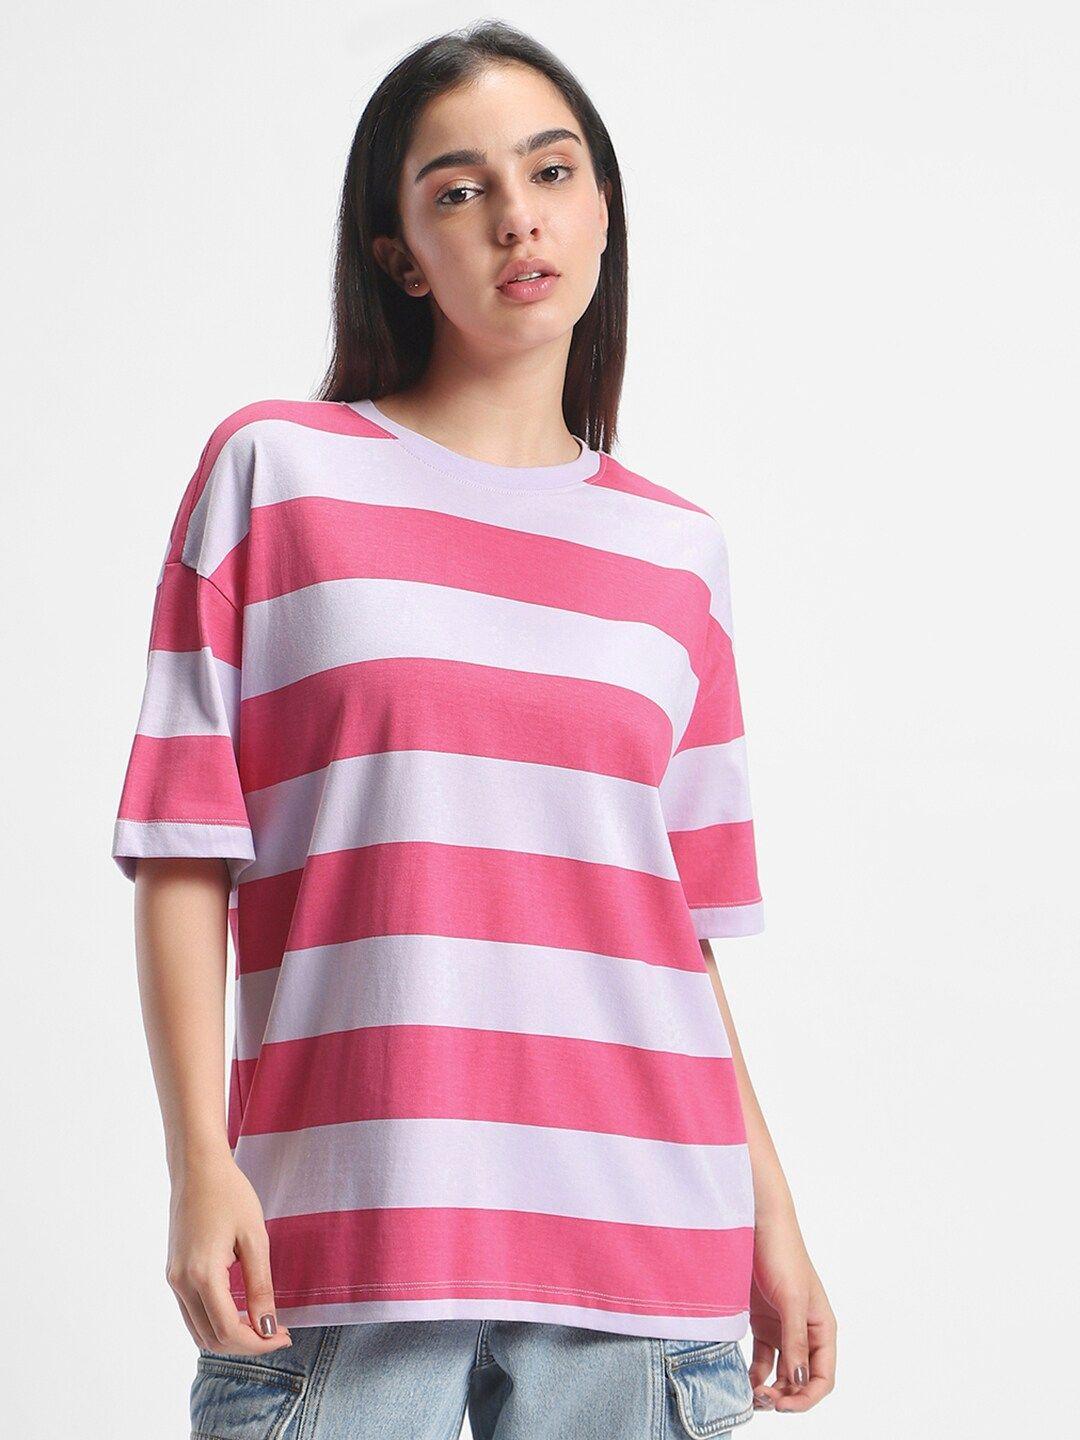 bewakoof off white & pink striped oversized t-shirt